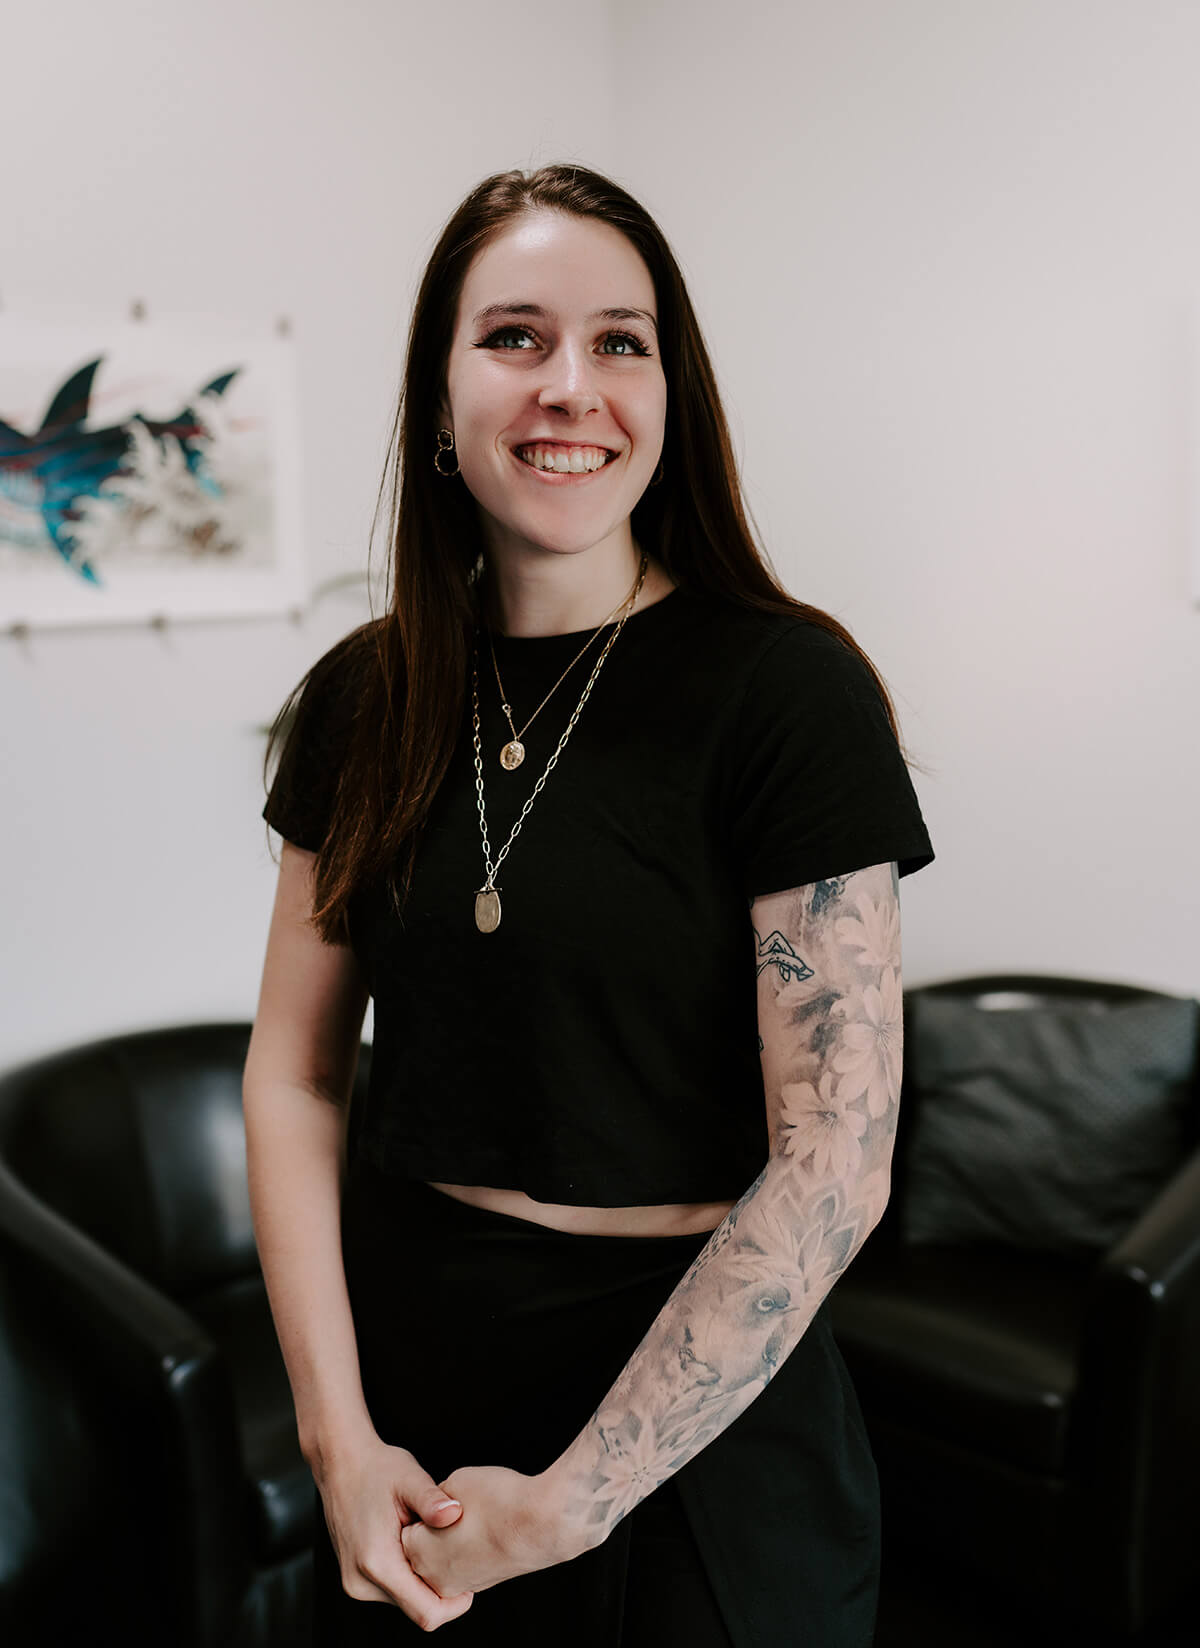 Artist Of The Month: Lauren De Vincentis from Illusion Tattoo